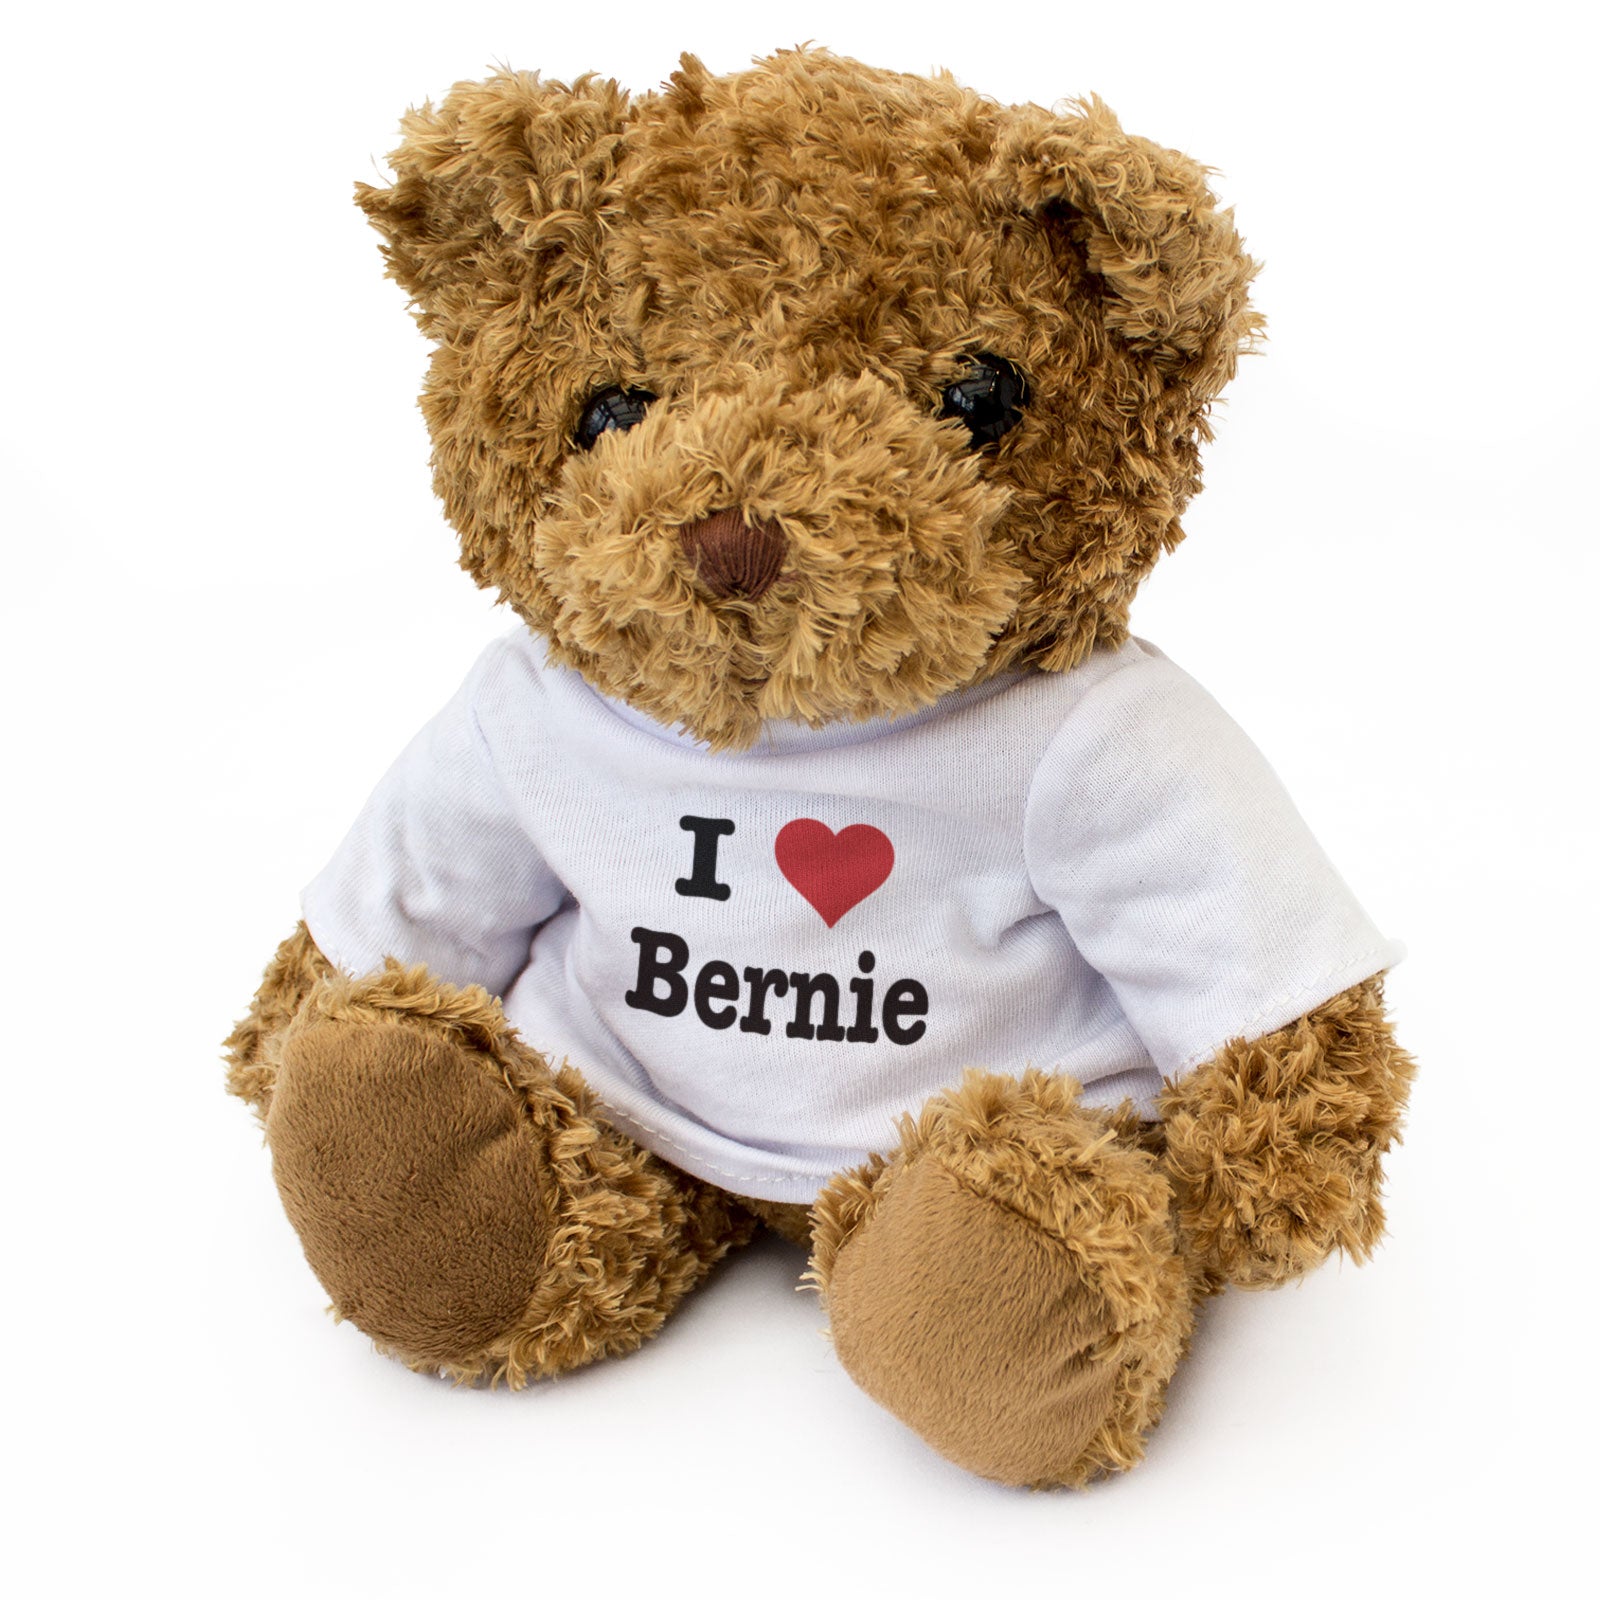 I Love Bernie - Teddy Bear